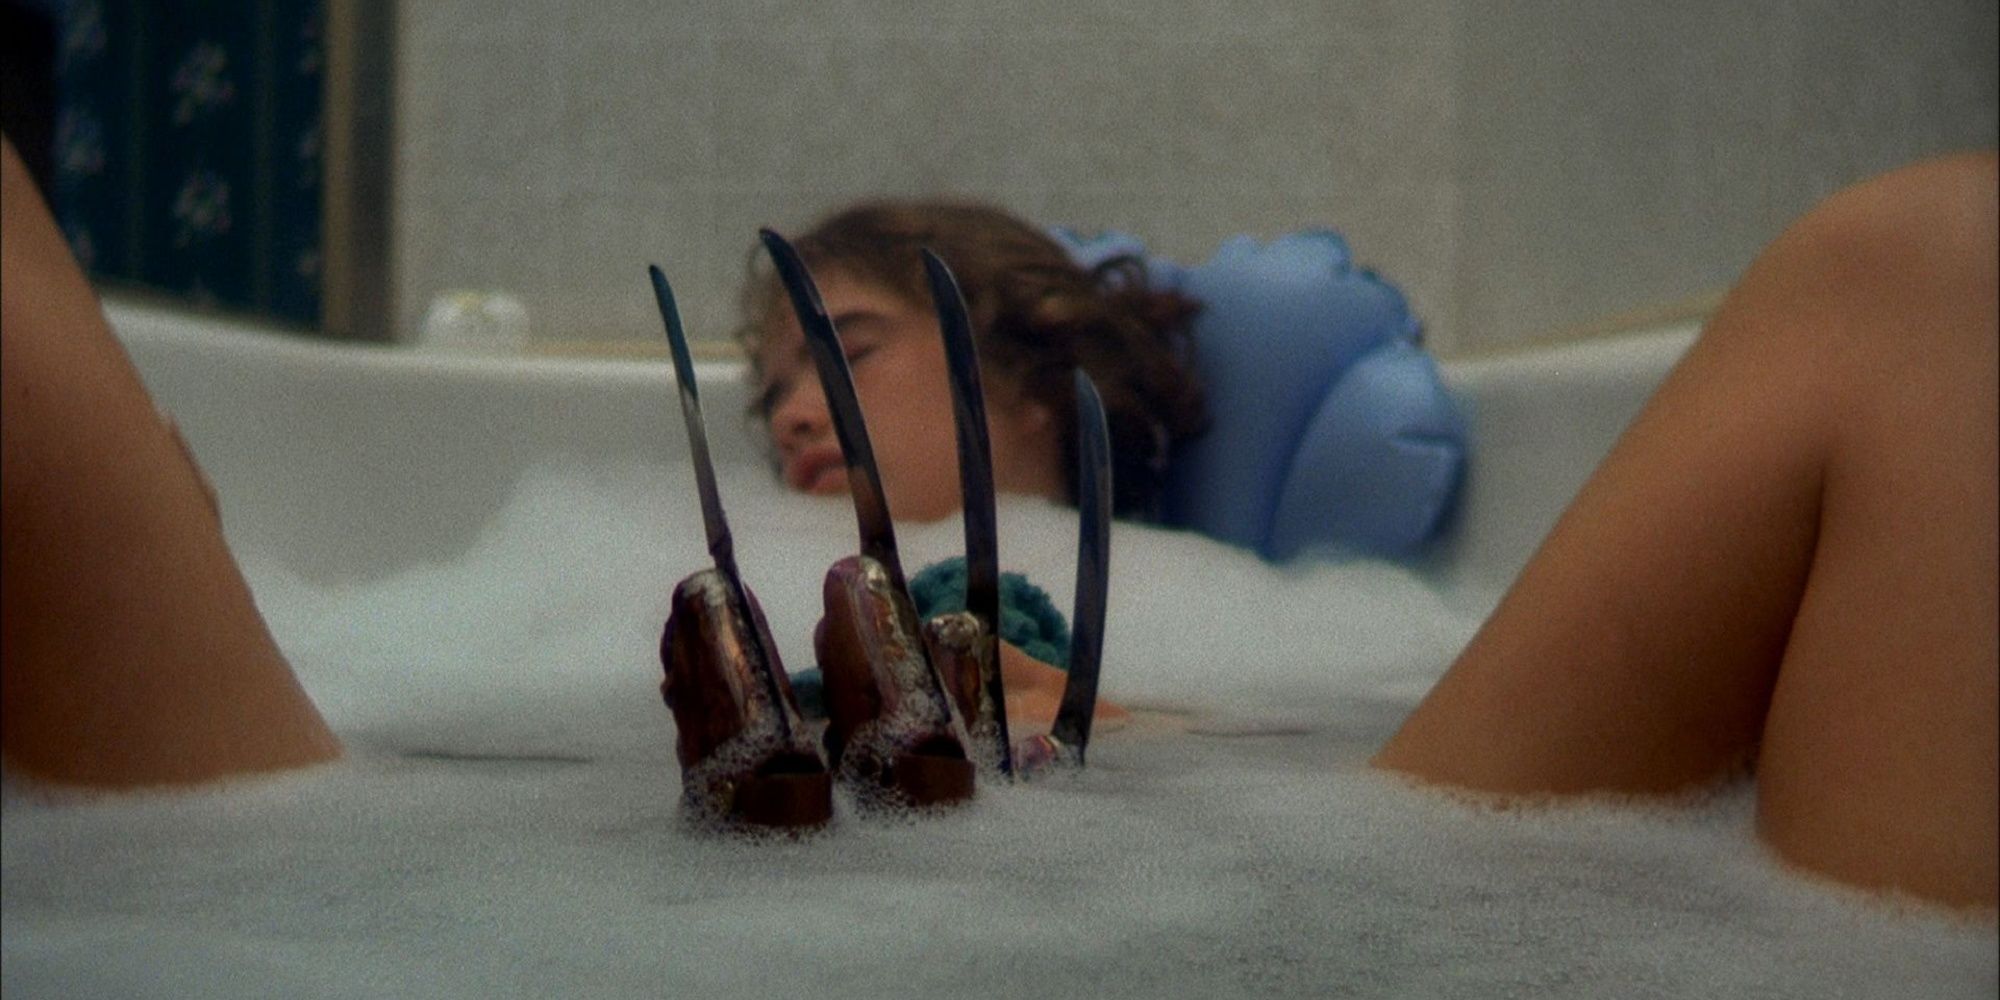 A girl sleeps in the bath as a claw rises beneath her legs